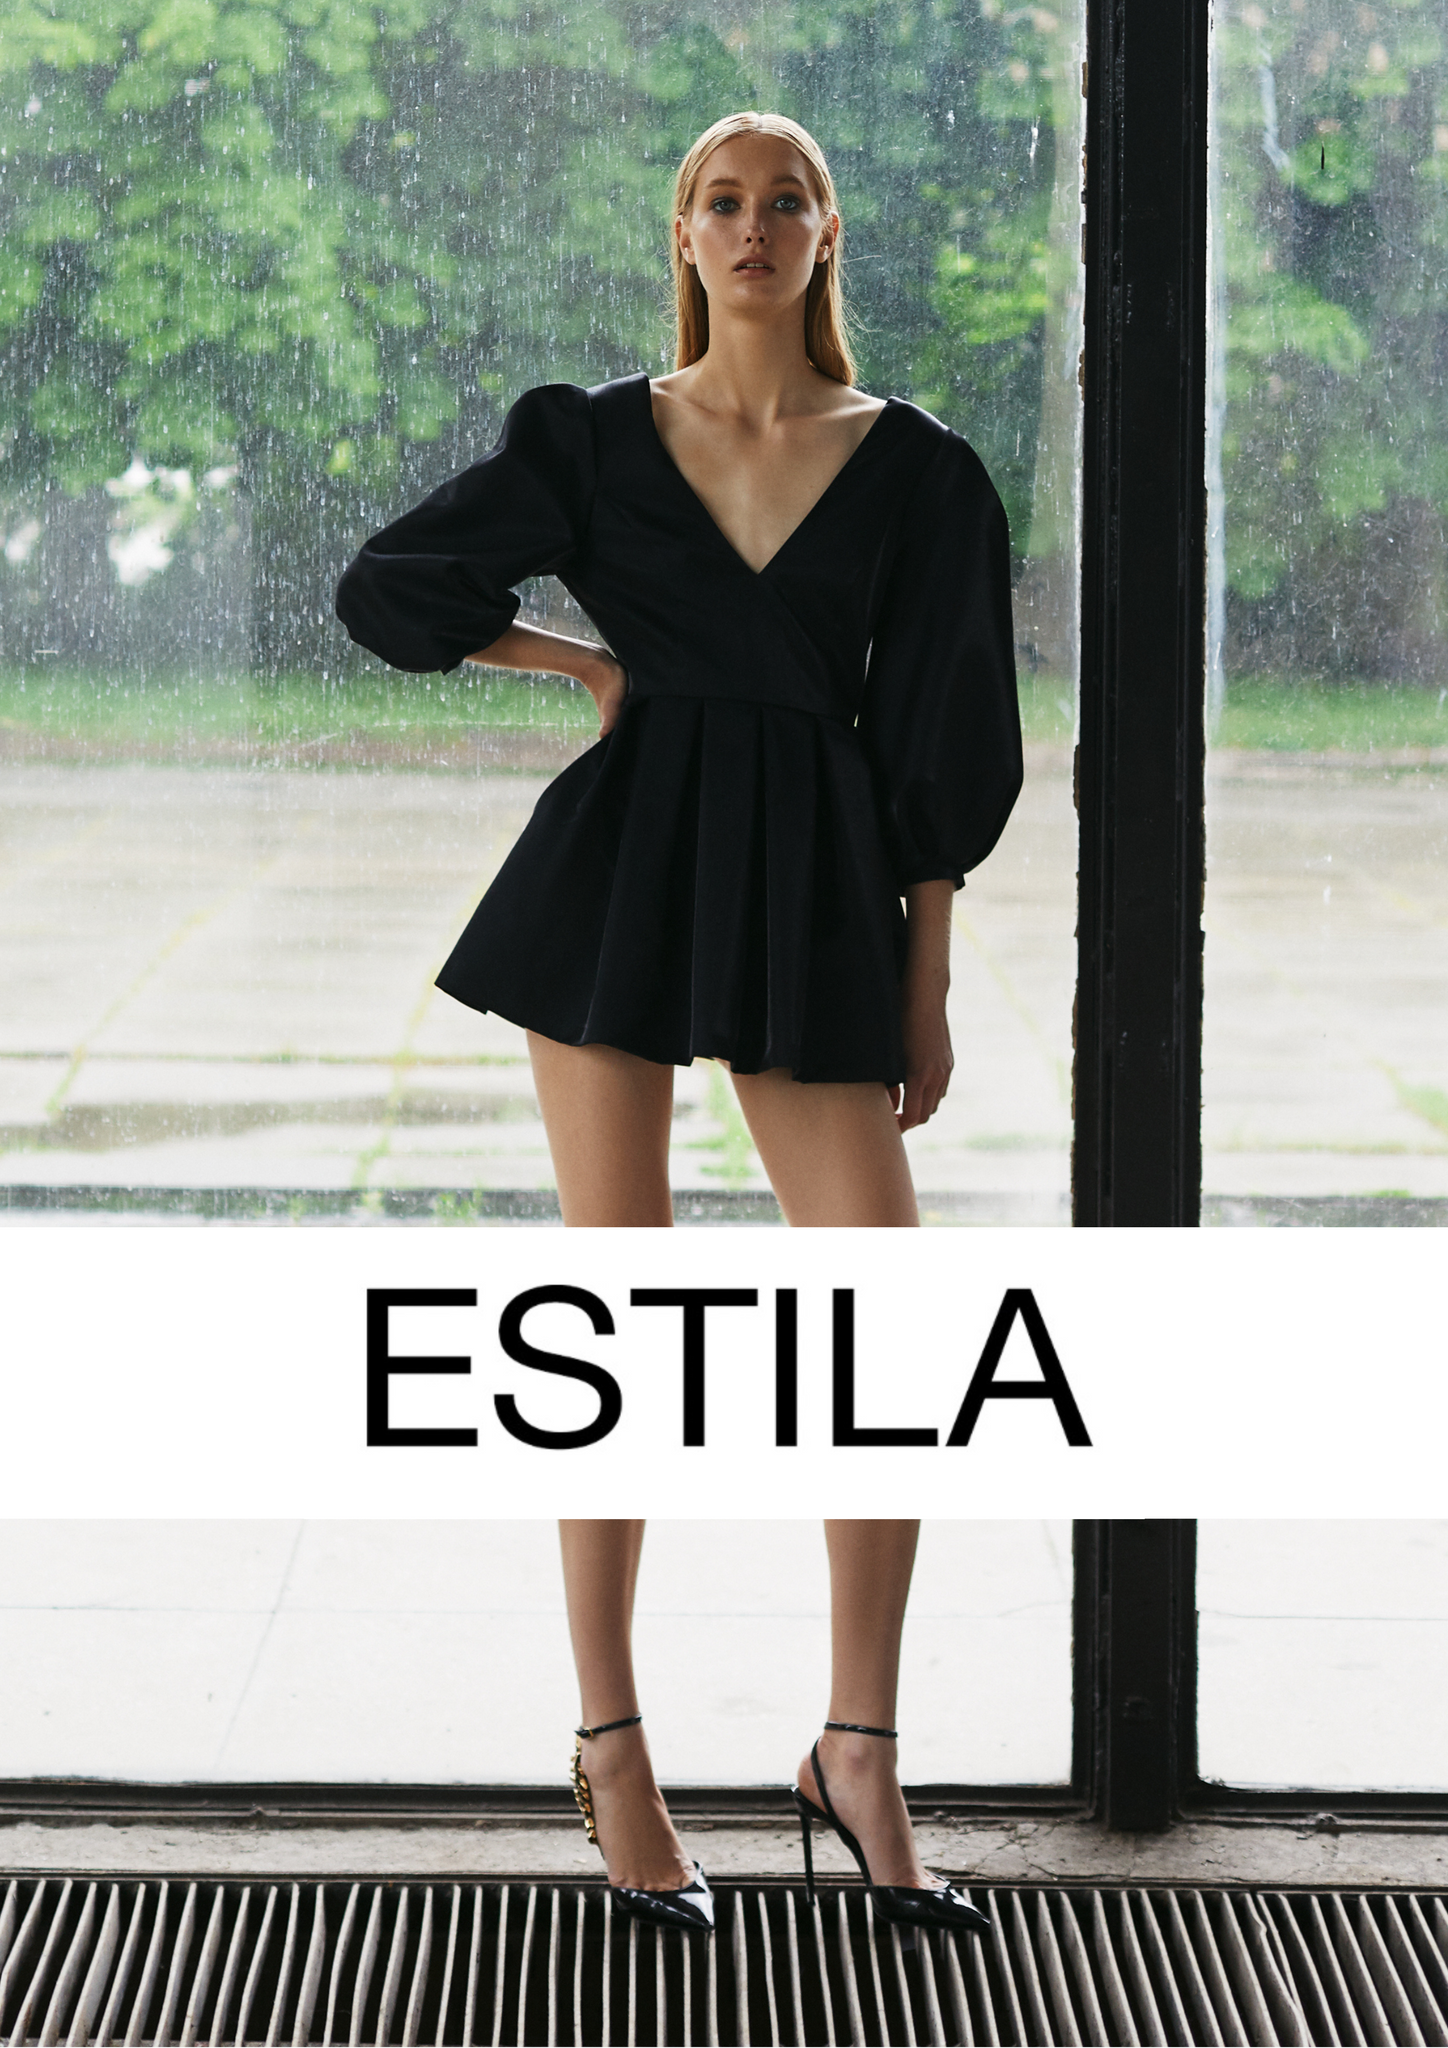 SONI London Featured in Estila Magazine!